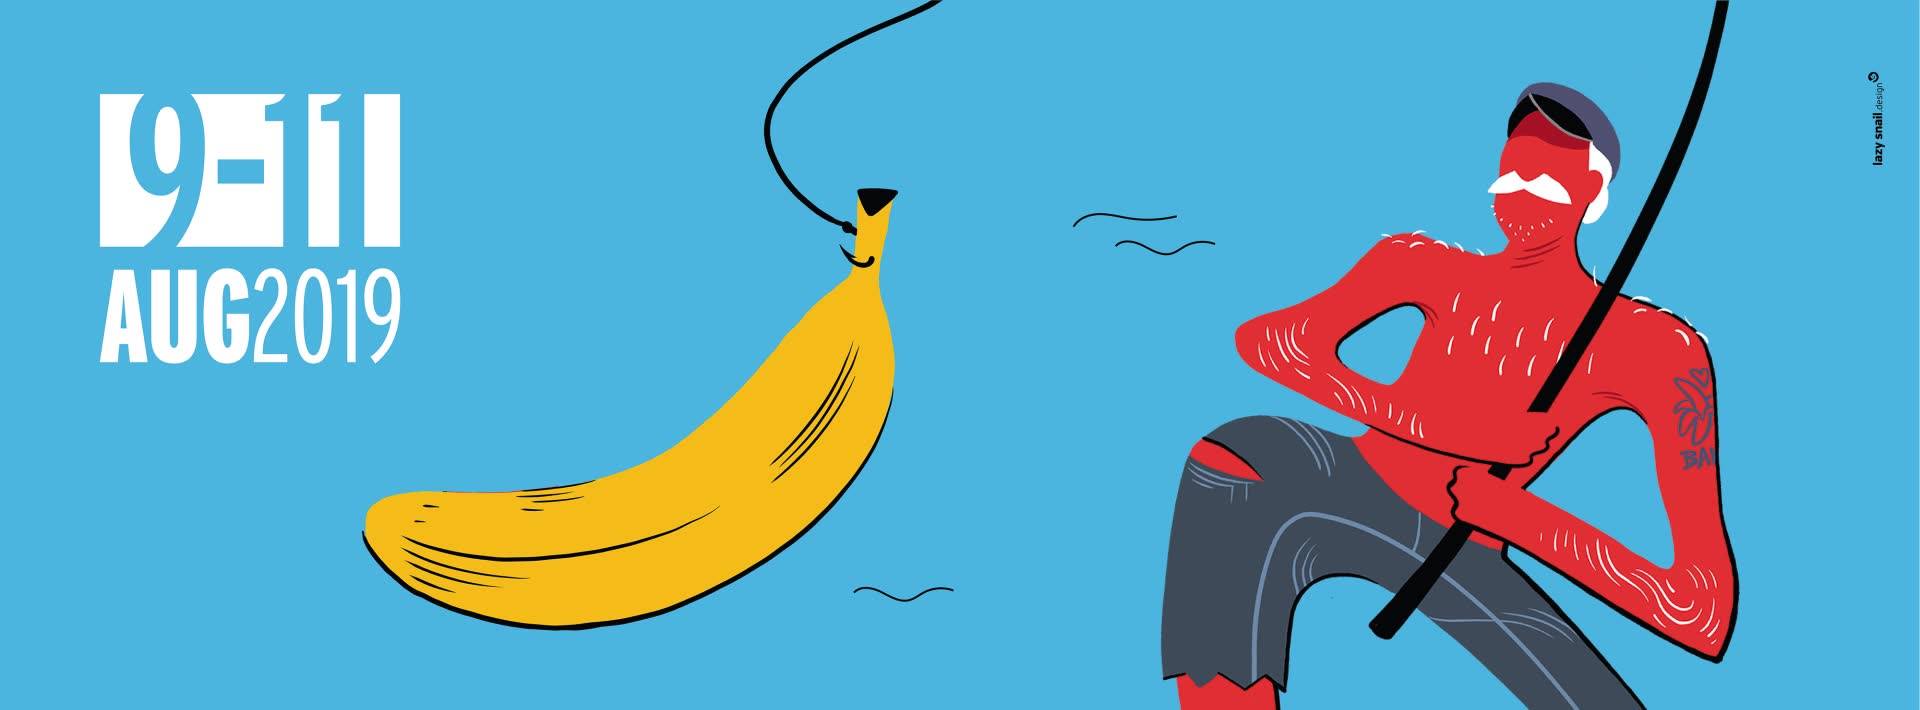 Festiwal bananów - Avri